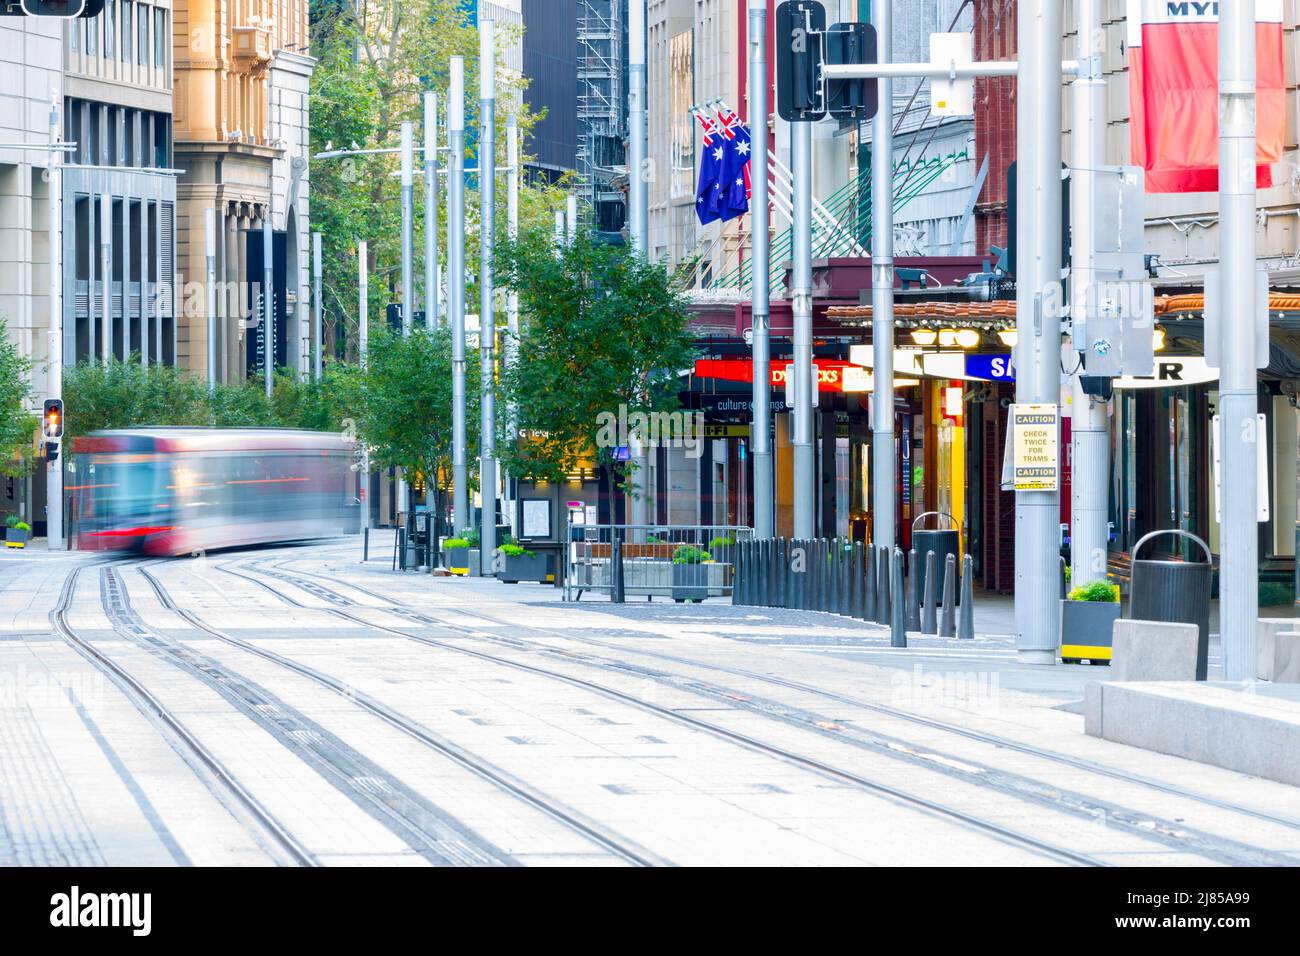 A light-rail tram on George Street in Sydney, Australia. Stock Photo